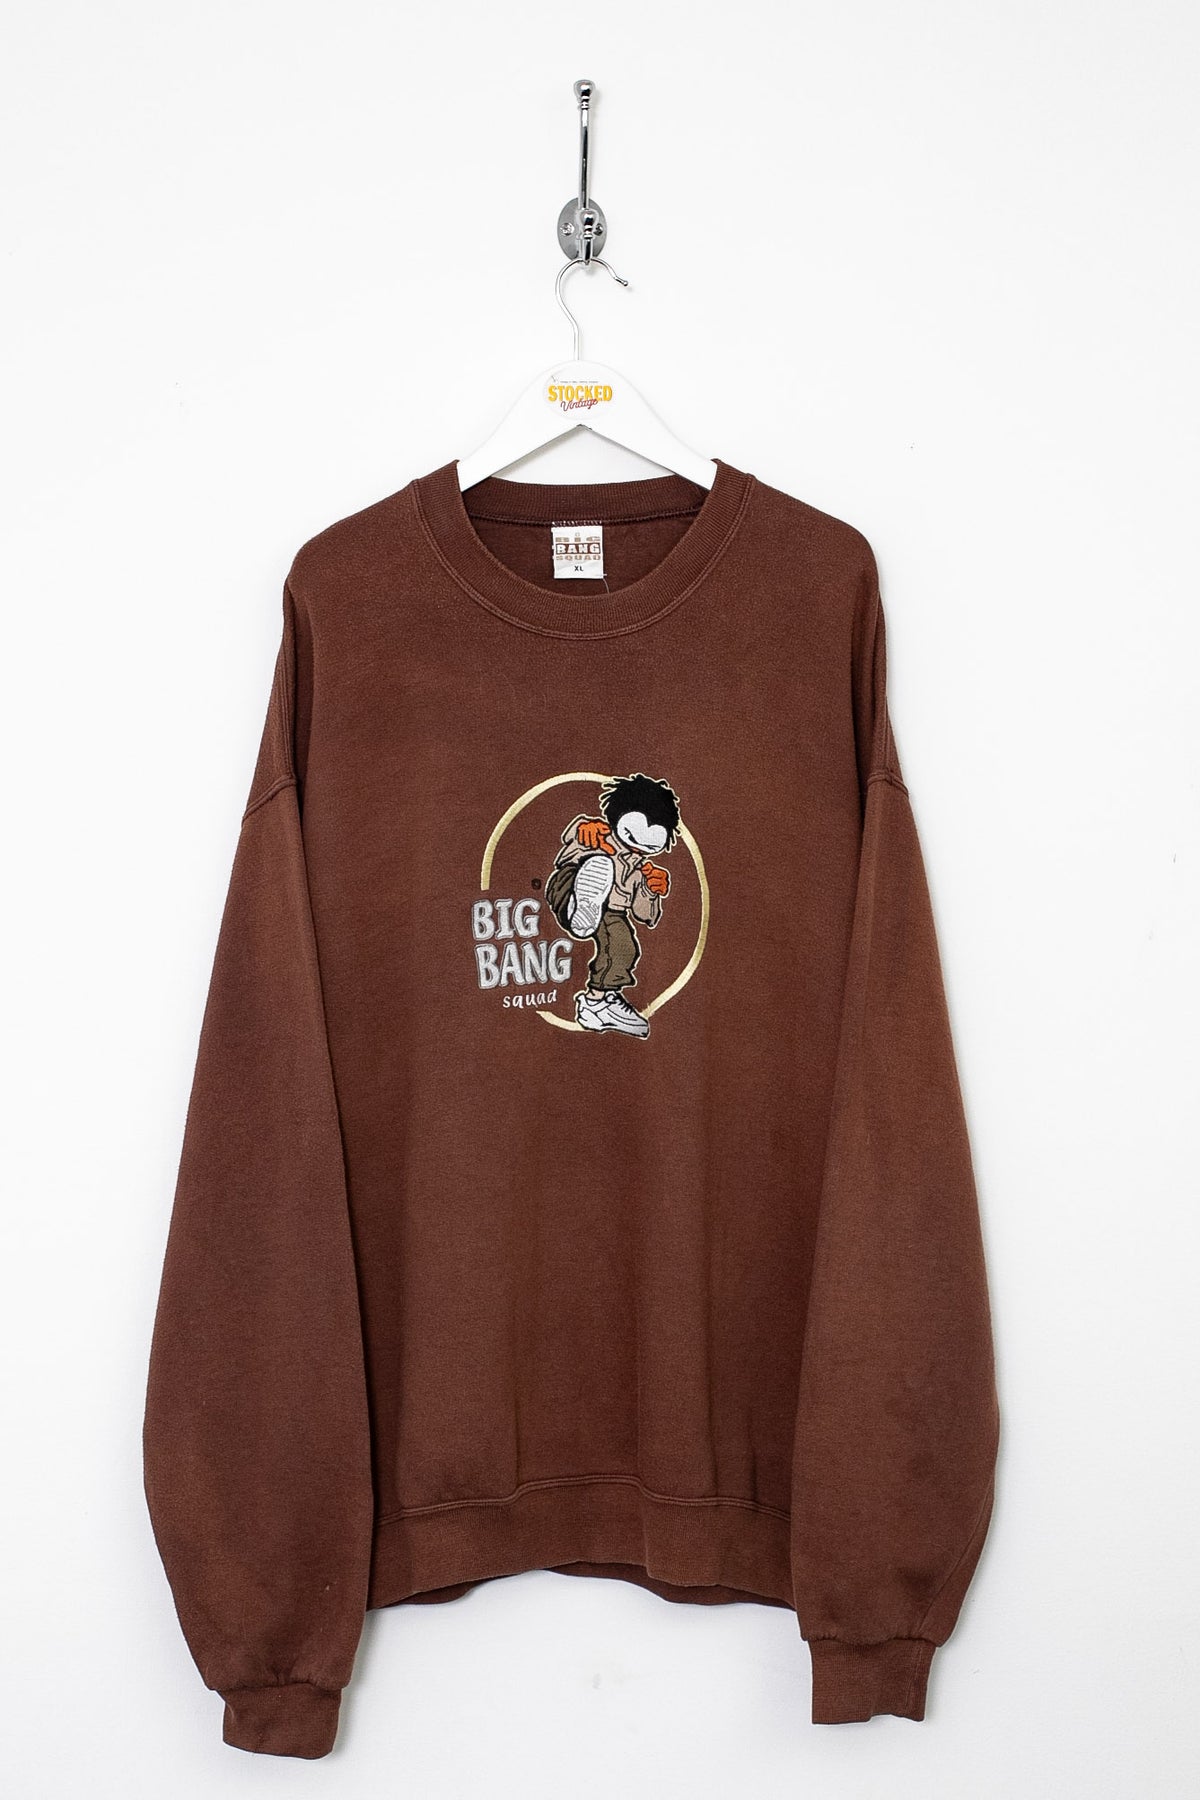 90s Big Bang Squad Sweatshirt (XL)